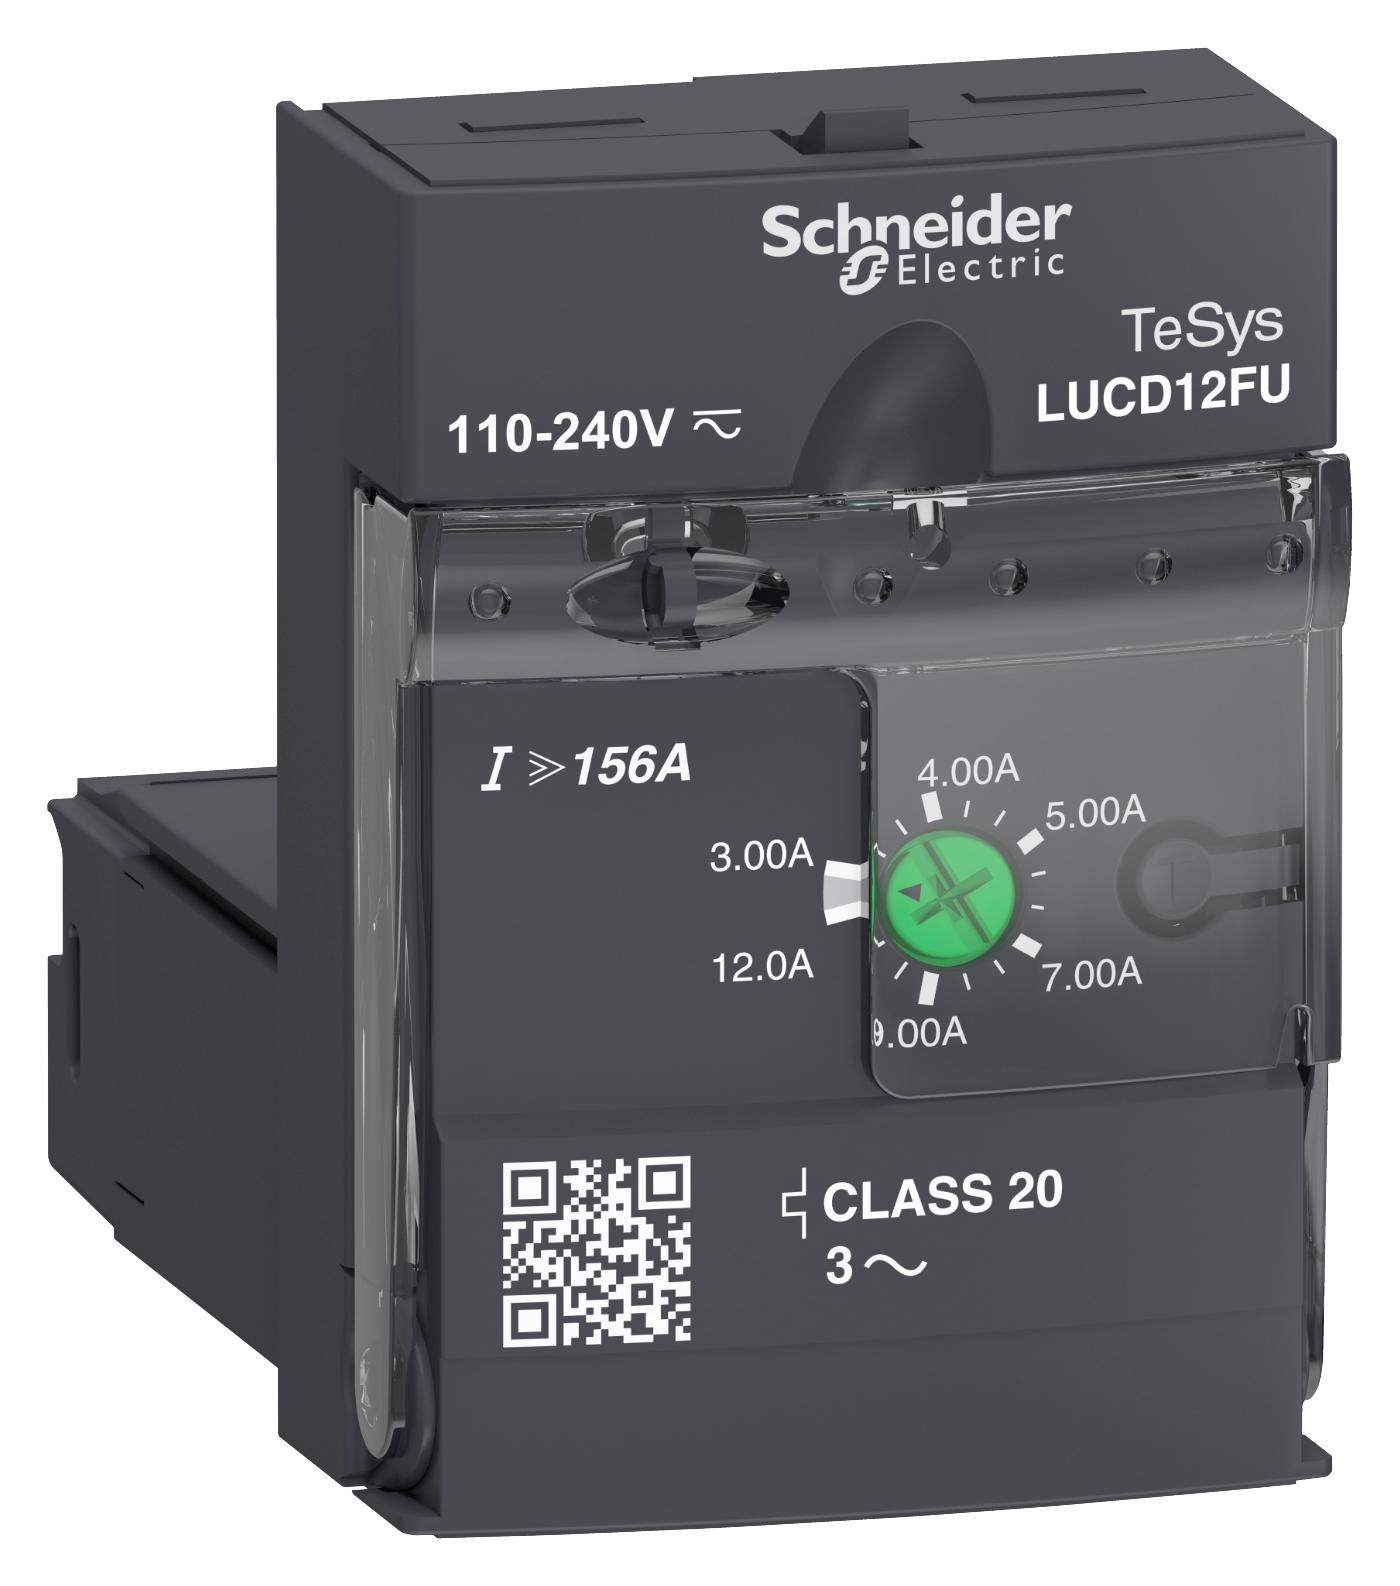 LUCD12FU UNIT 3-12A 110-240V SCHNEIDER ELECTRIC